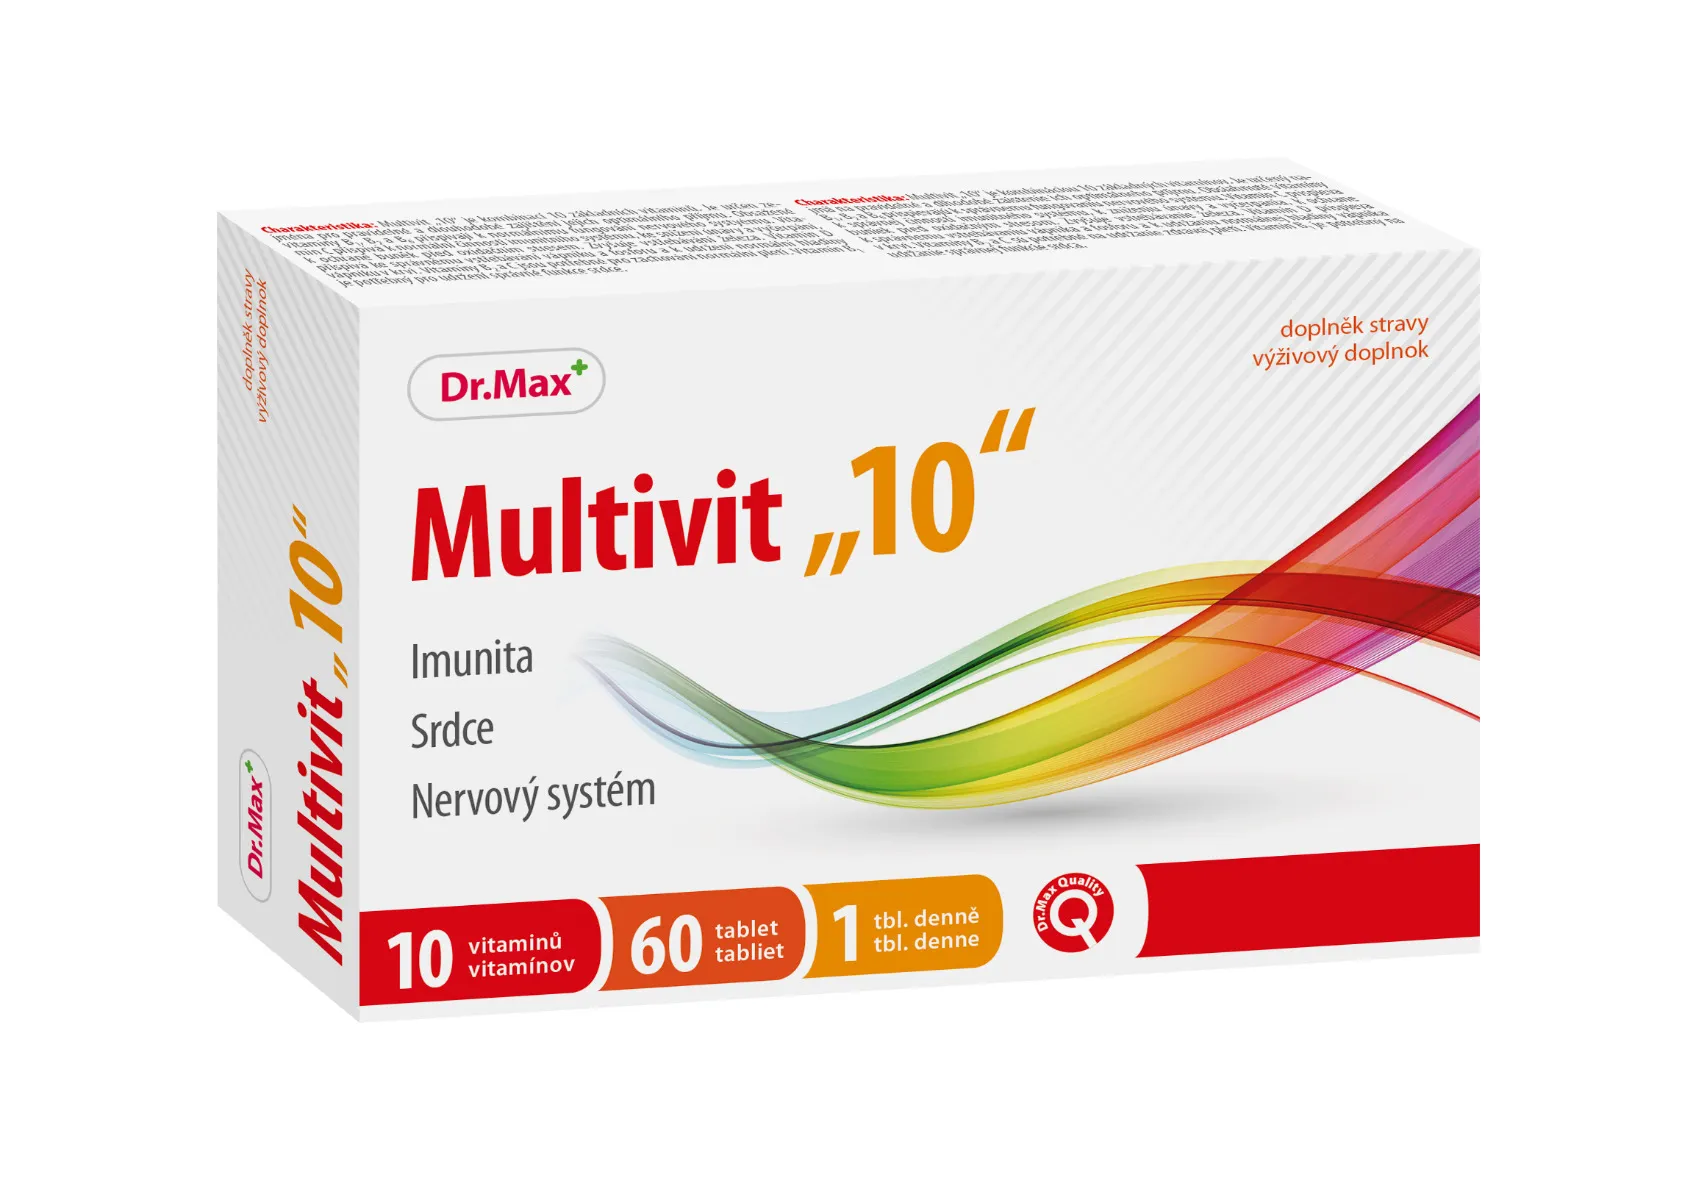 Dr.Max Multivit "10"